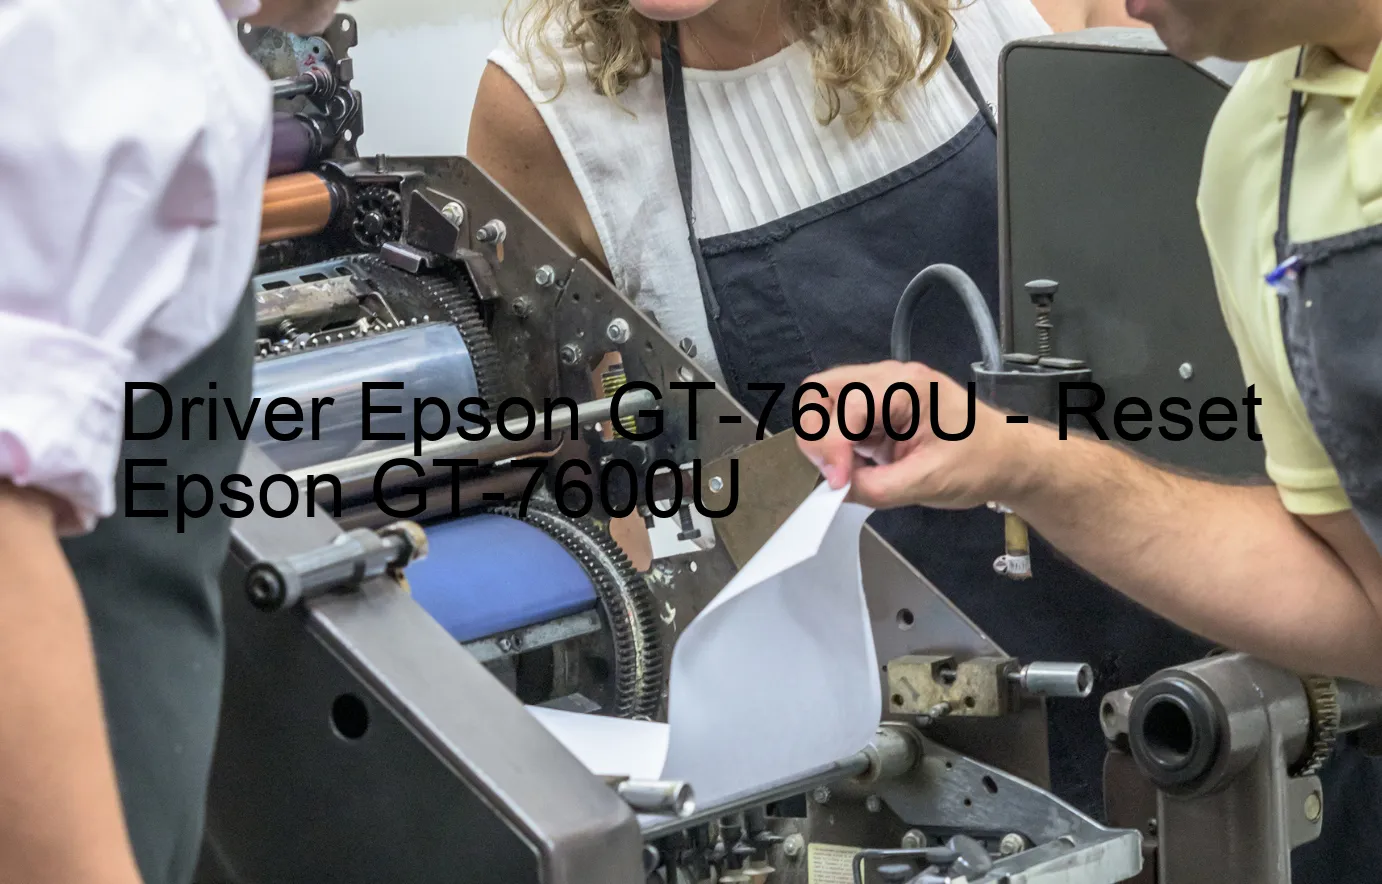 Epson GT-7600Uのドライバー、Epson GT-7600Uのリセットソフトウェア